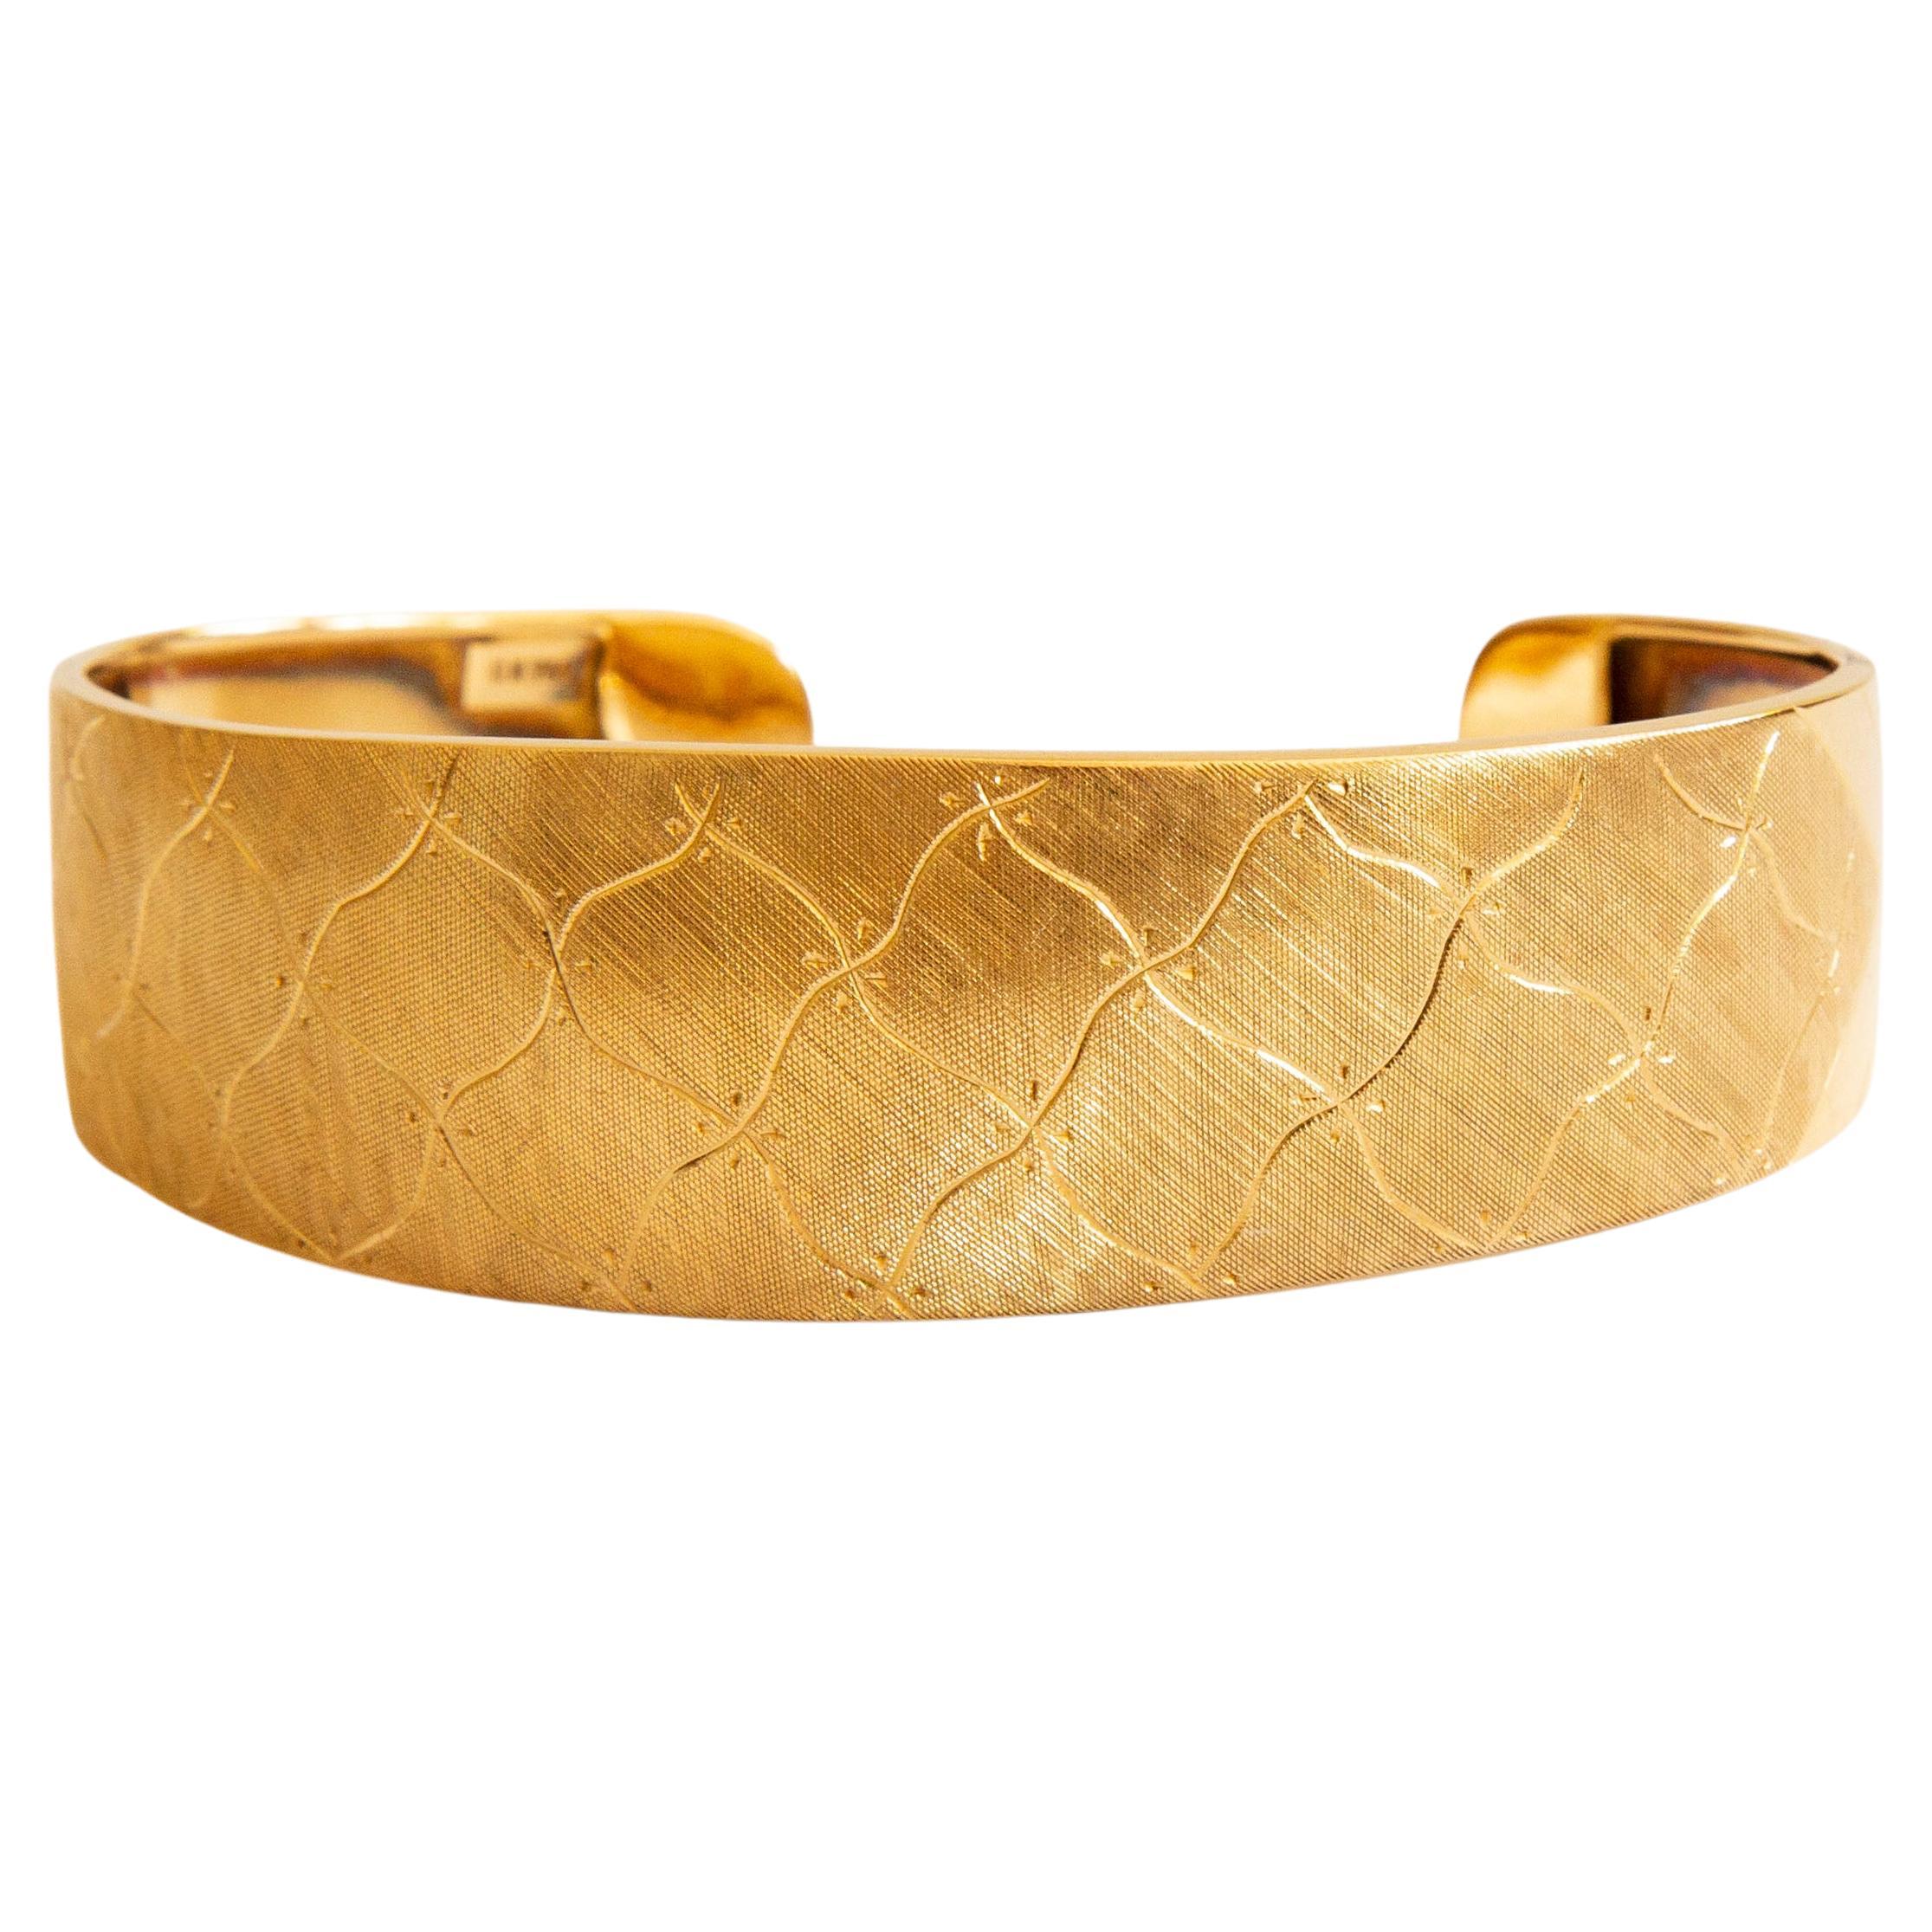 18 Karat Yellow Gold Cuff Bracelet Engraved with Diamond Pattern & Satin Finish For Sale